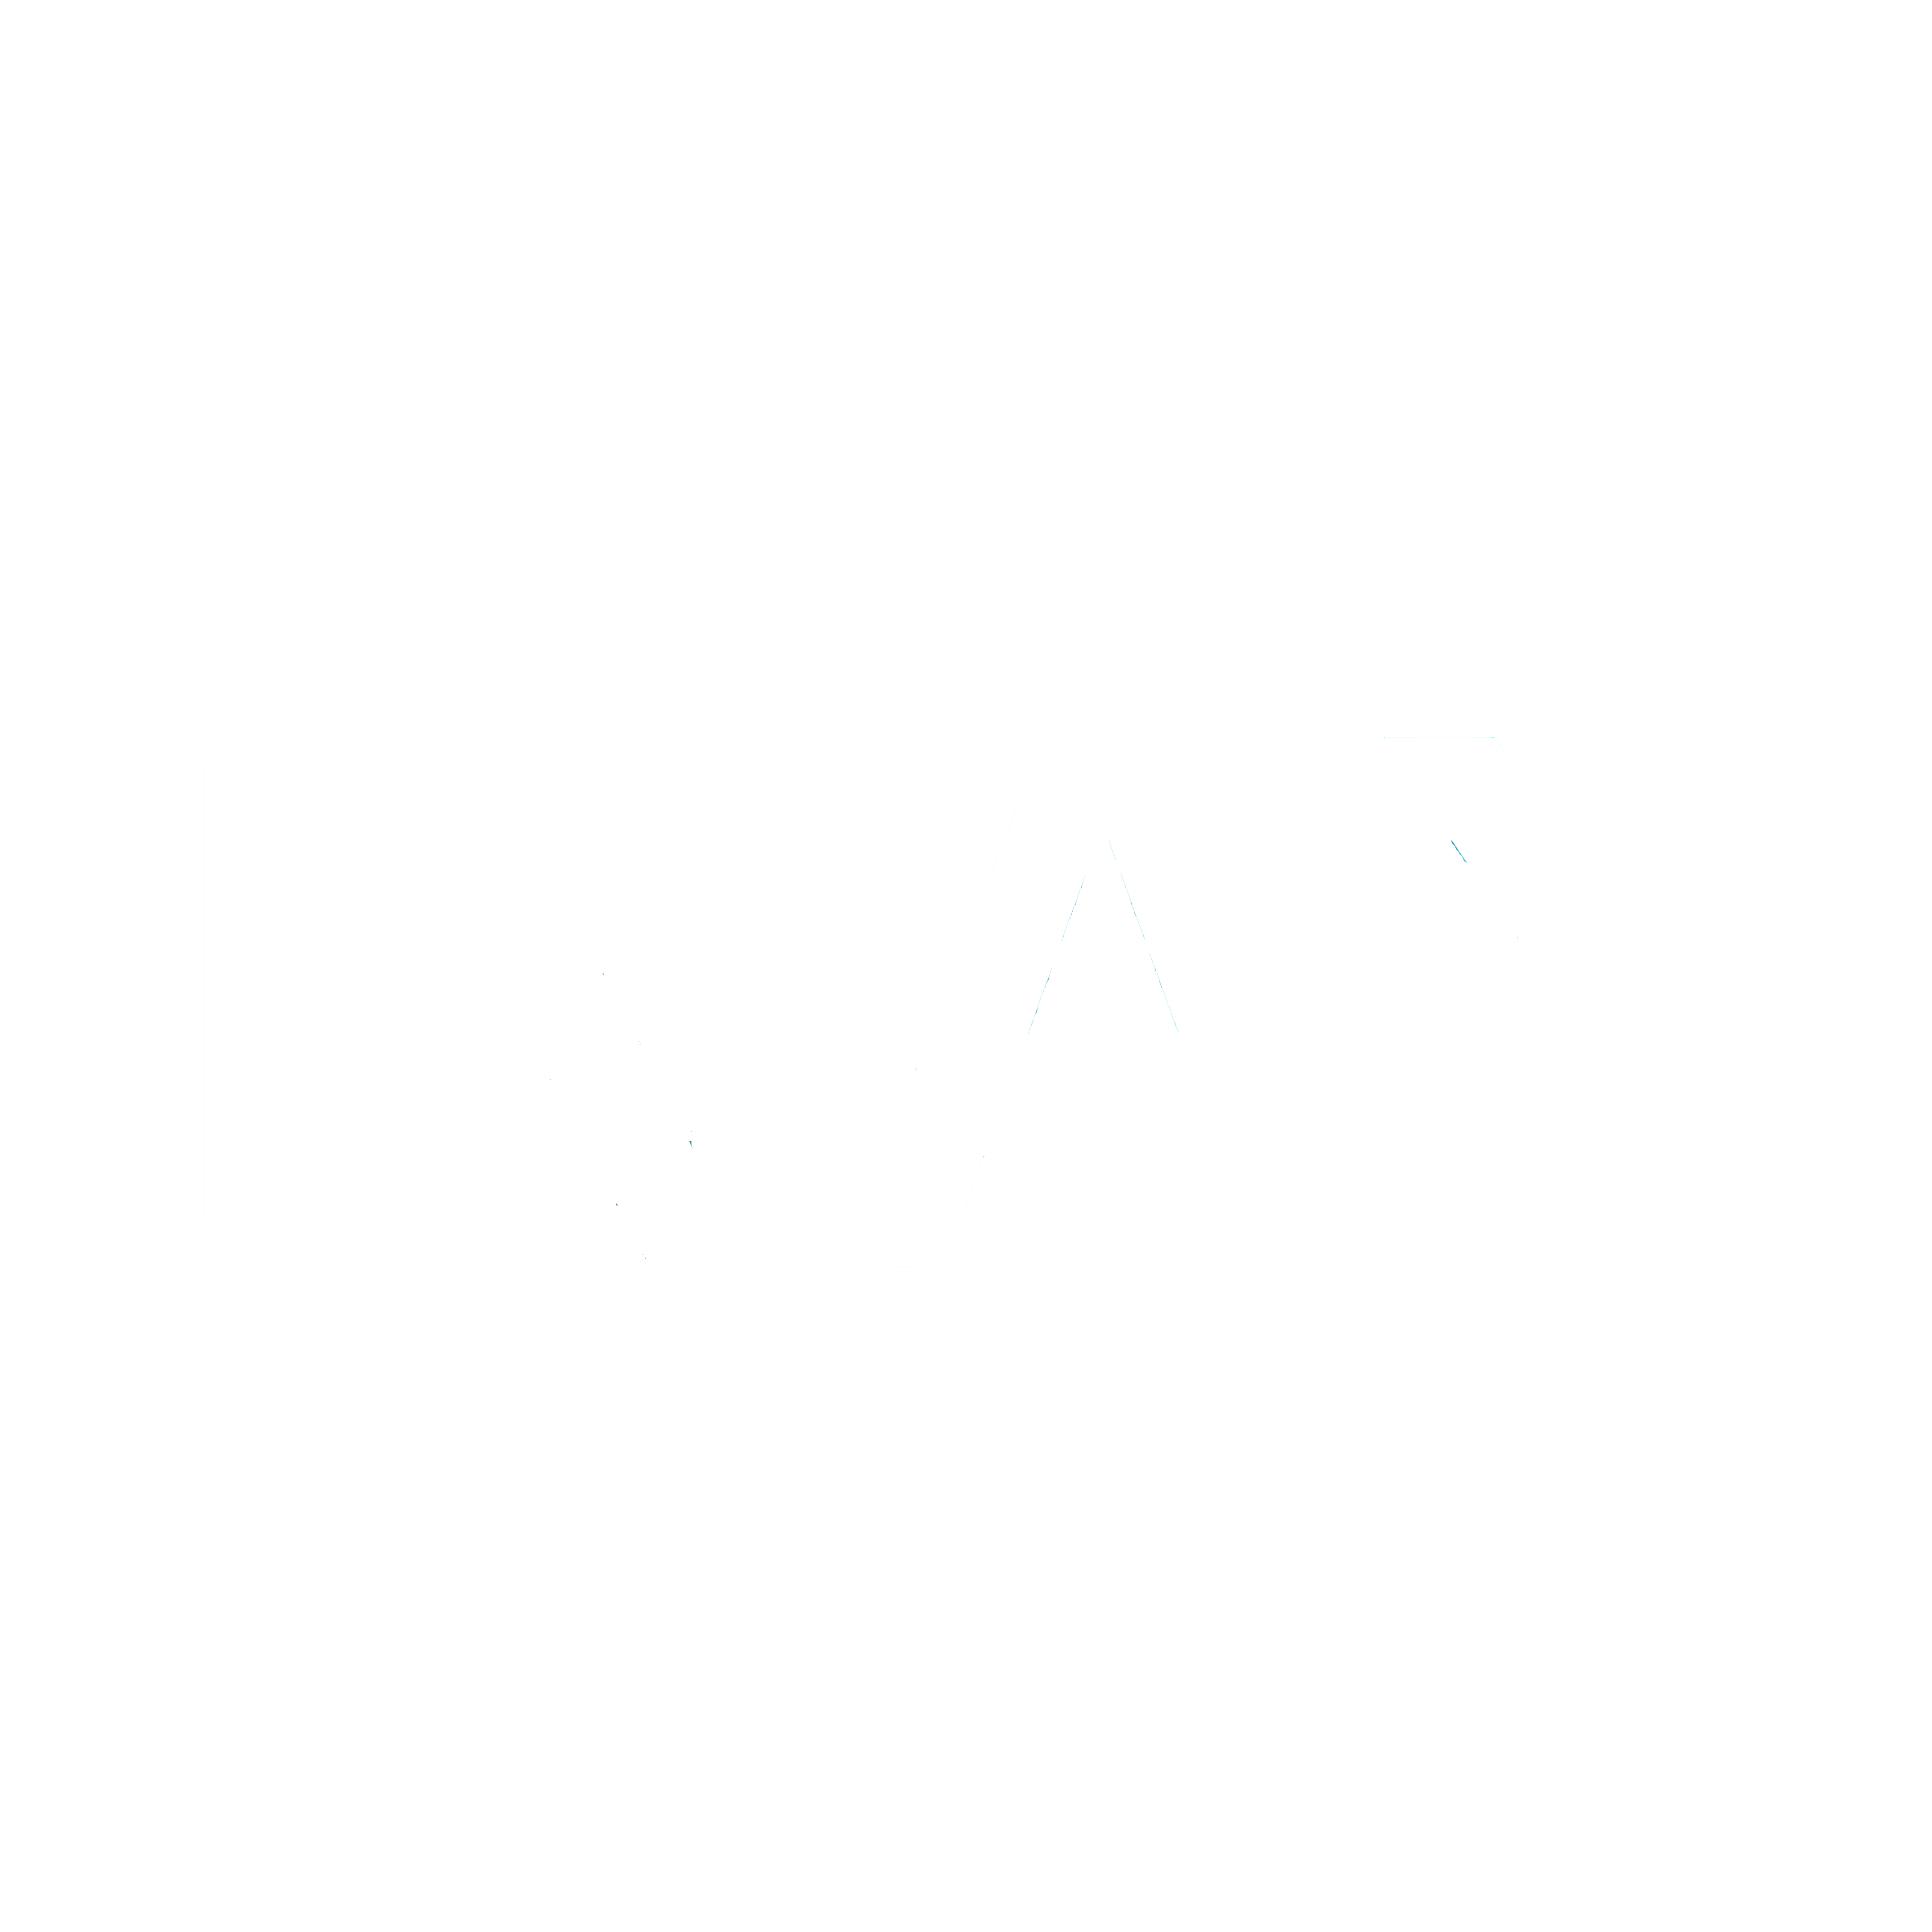 inax